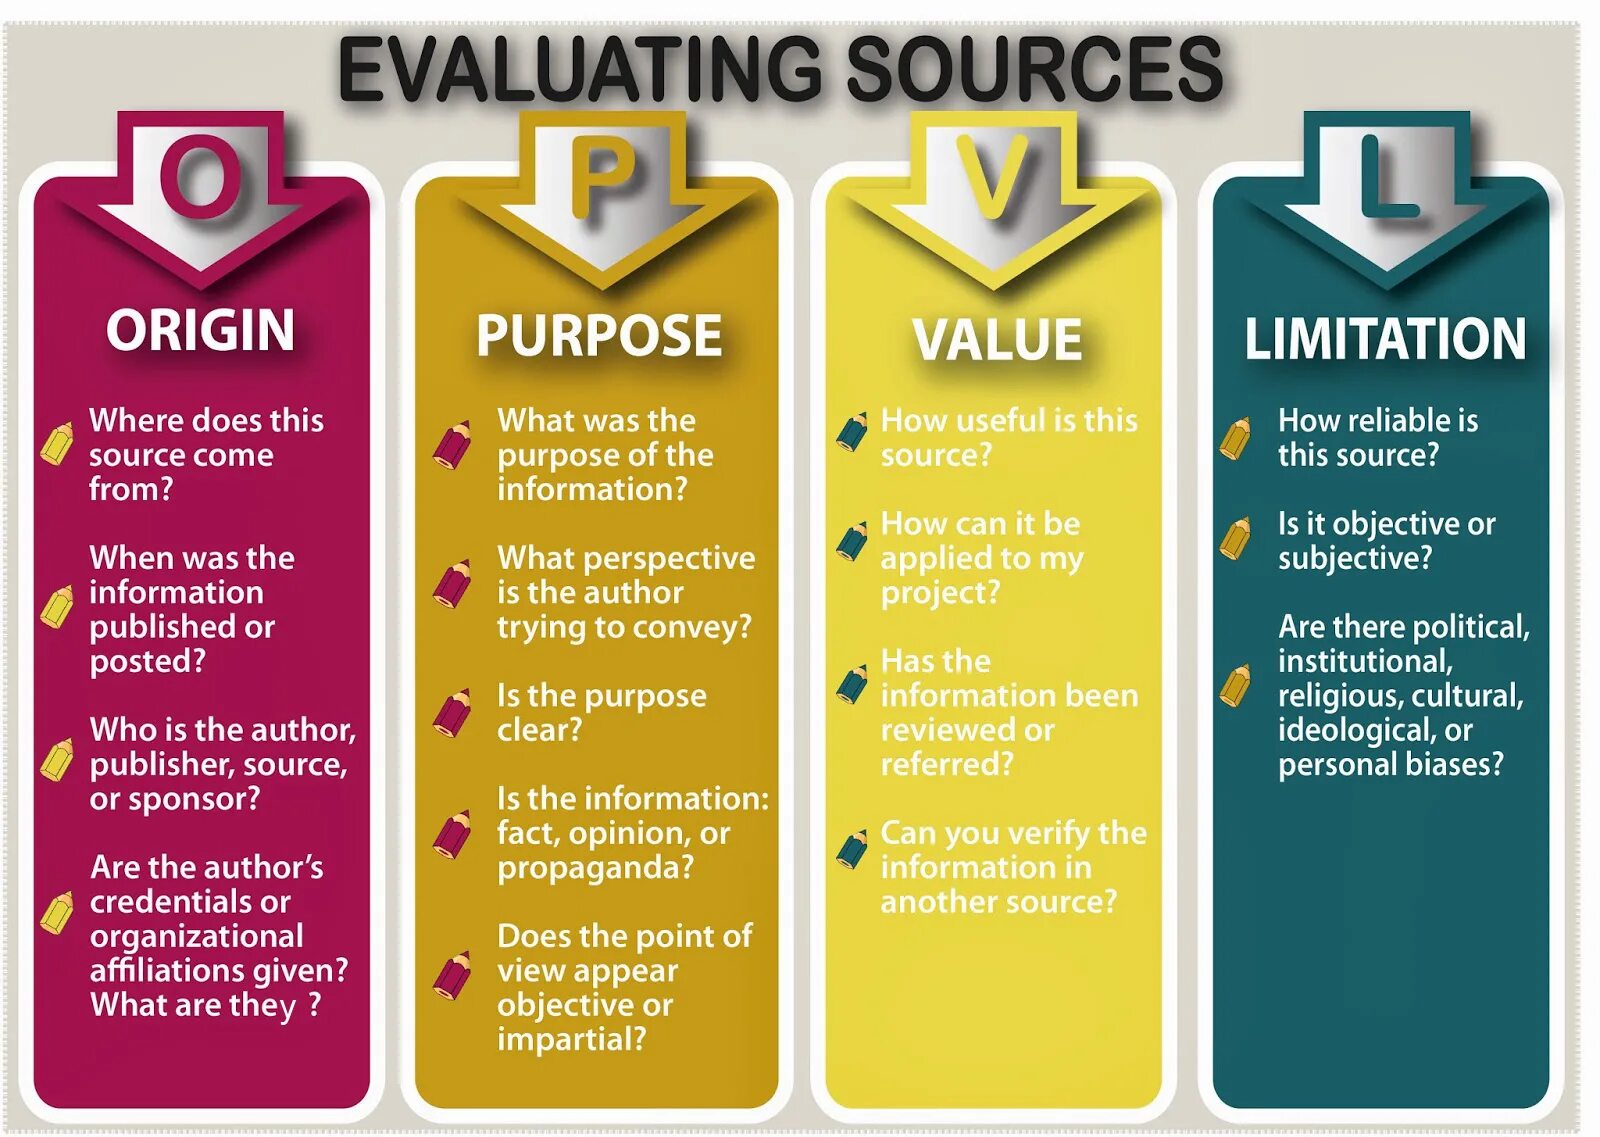 Content limit. OPVL. Purpose and values. Evaluate sources. OPCVL.